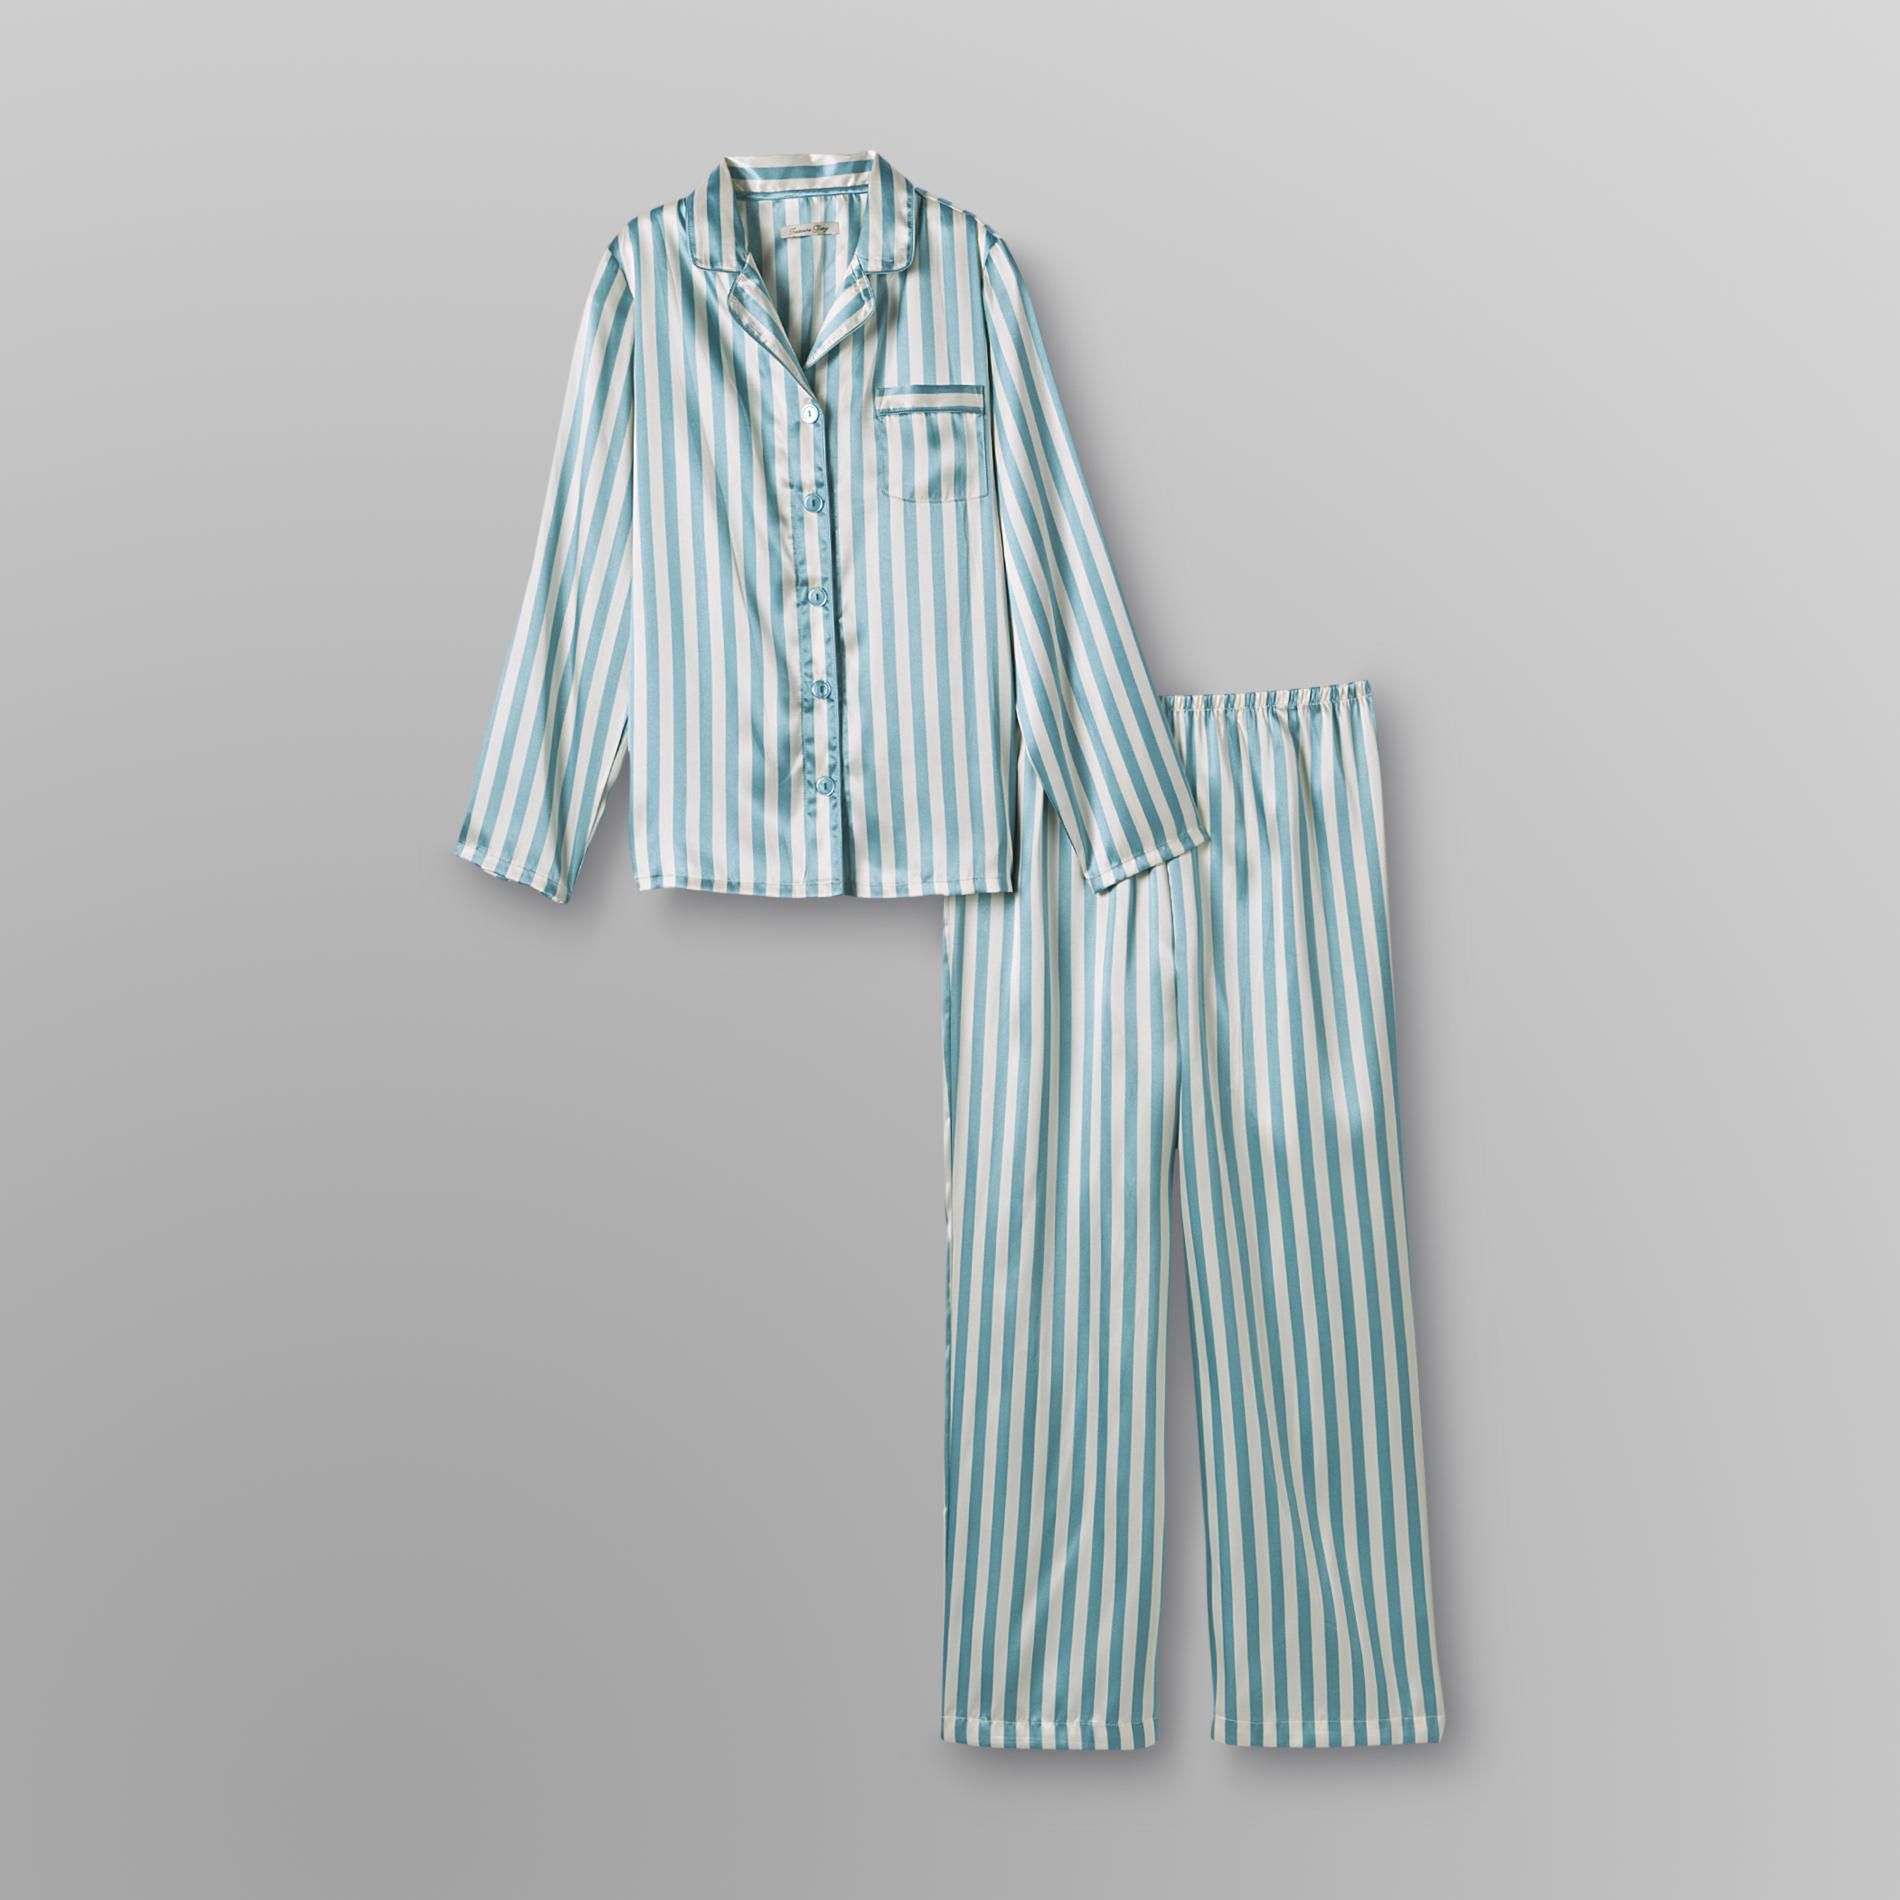 Jaclyn Smith Women's Pajamas - Stripes